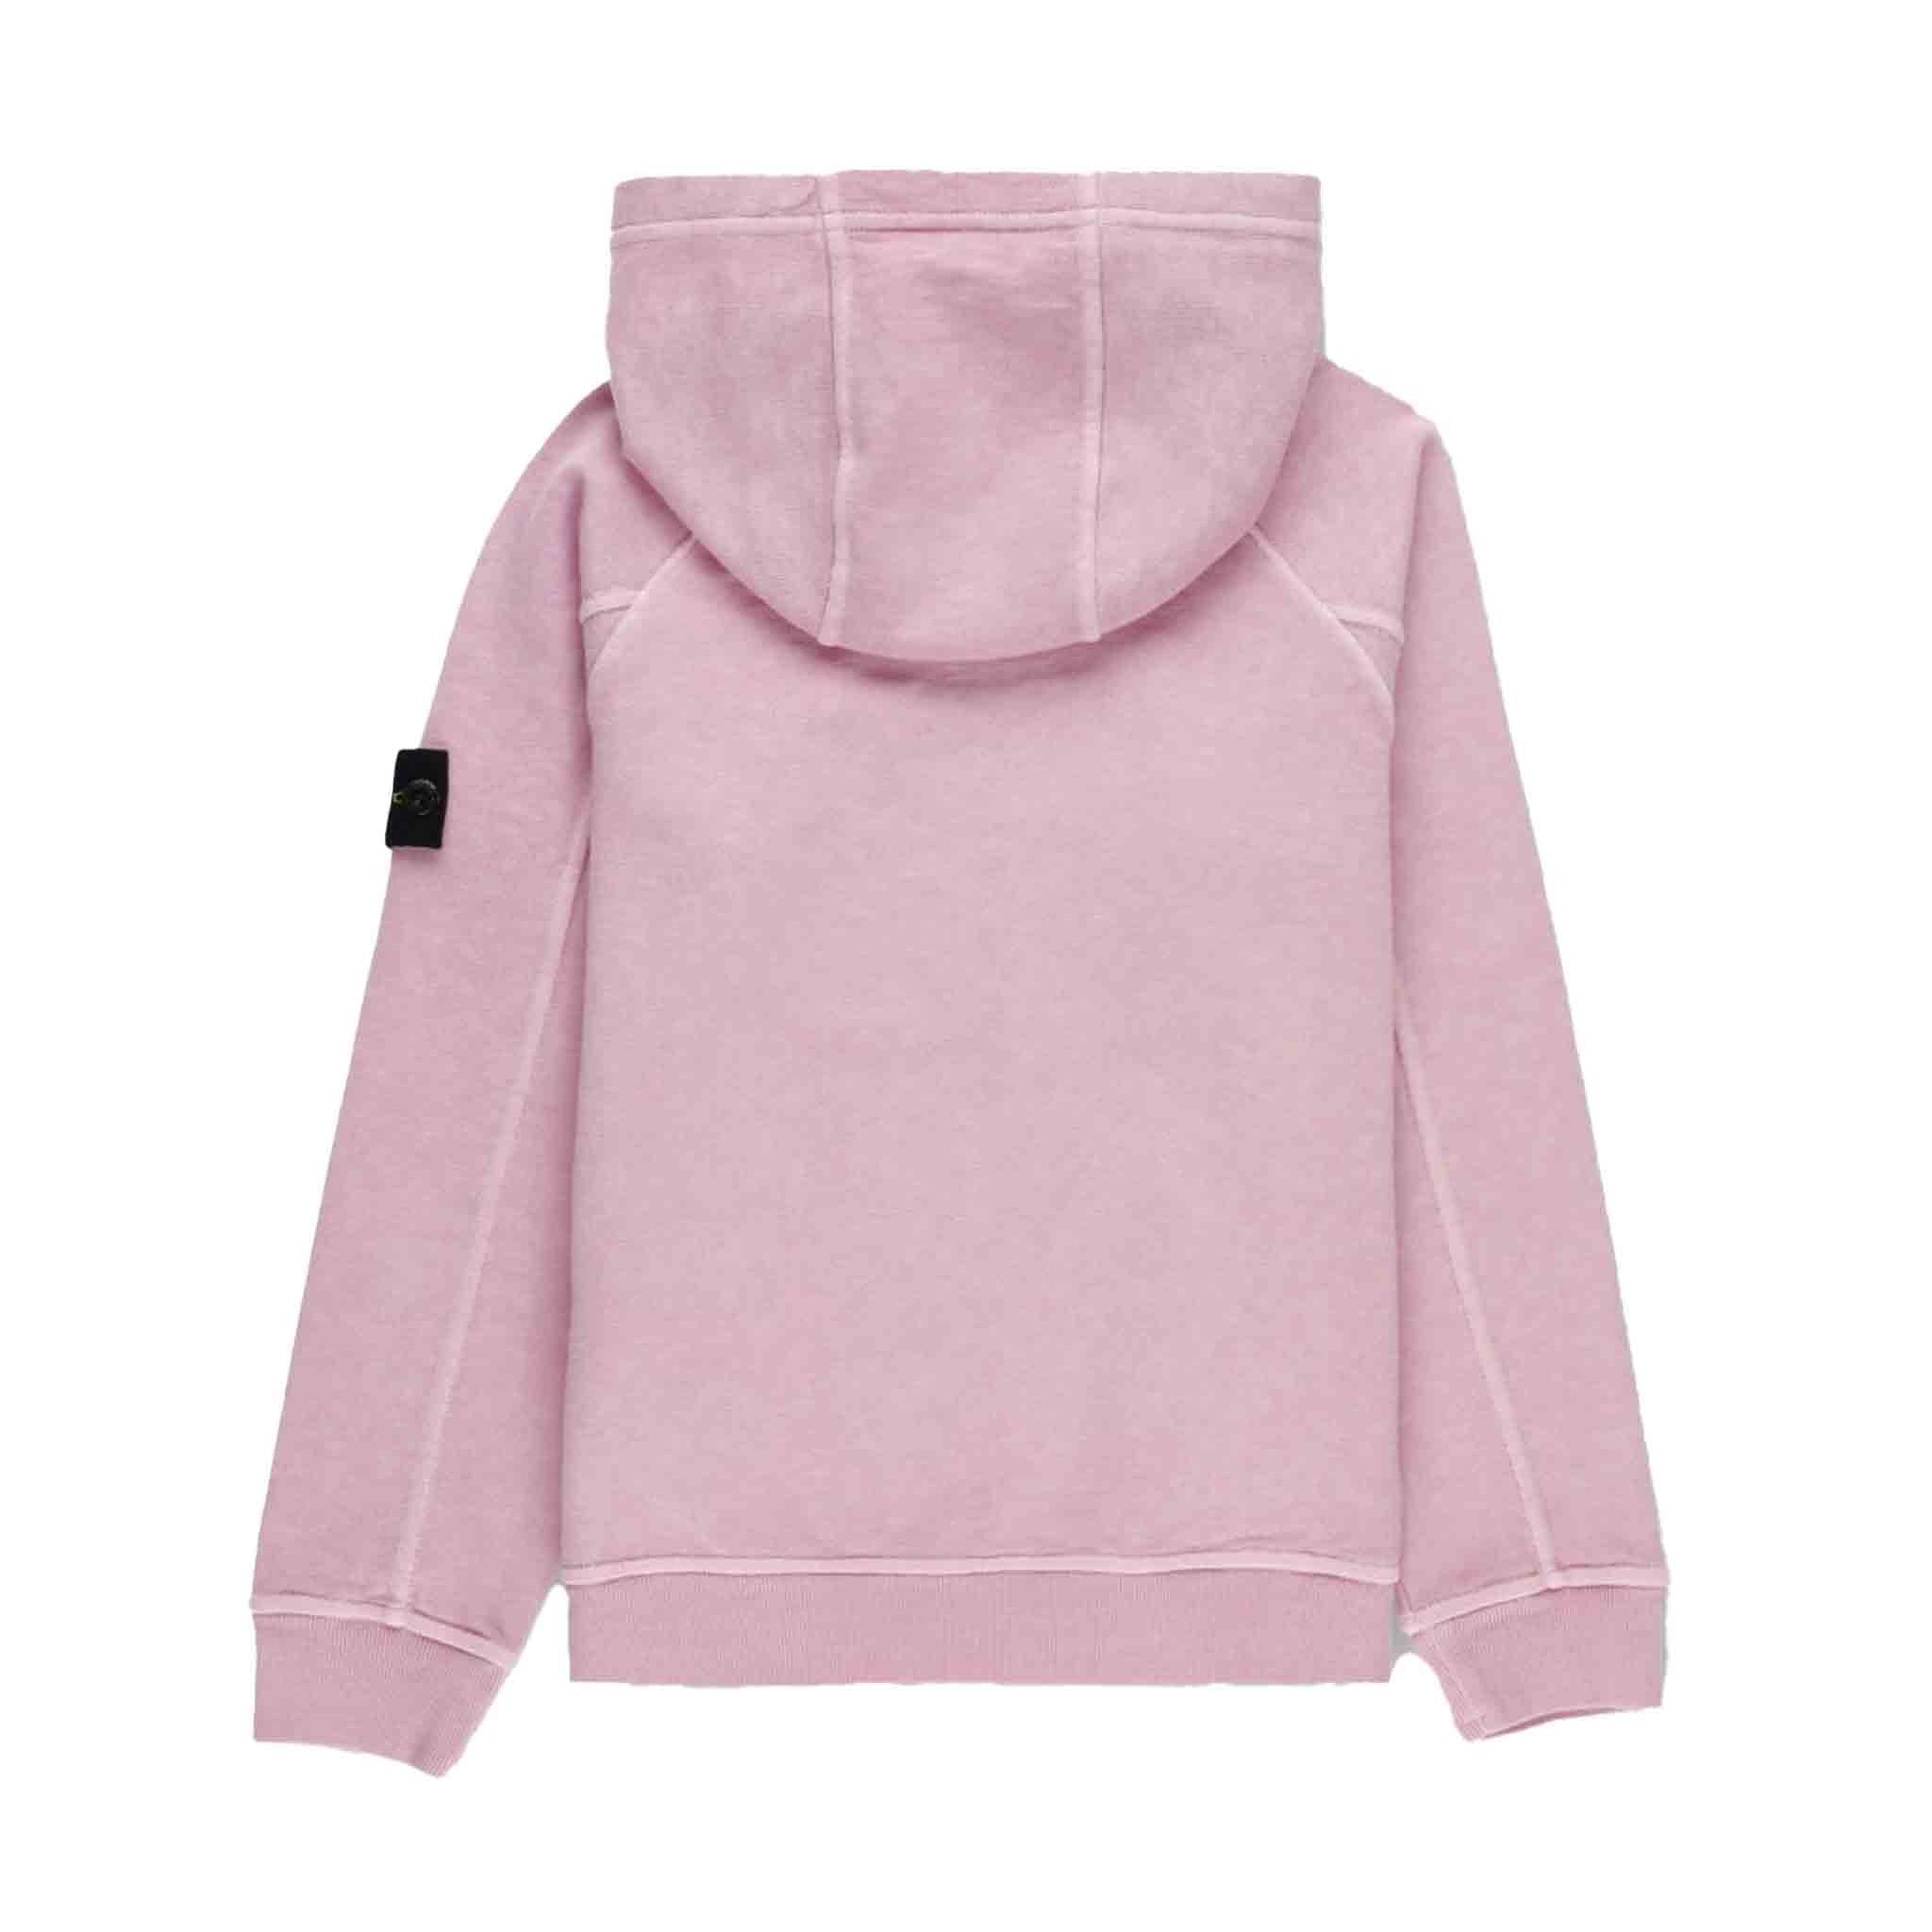 Stone Island Junior "Old Treatment" Hooded Sweatshirt in Pink